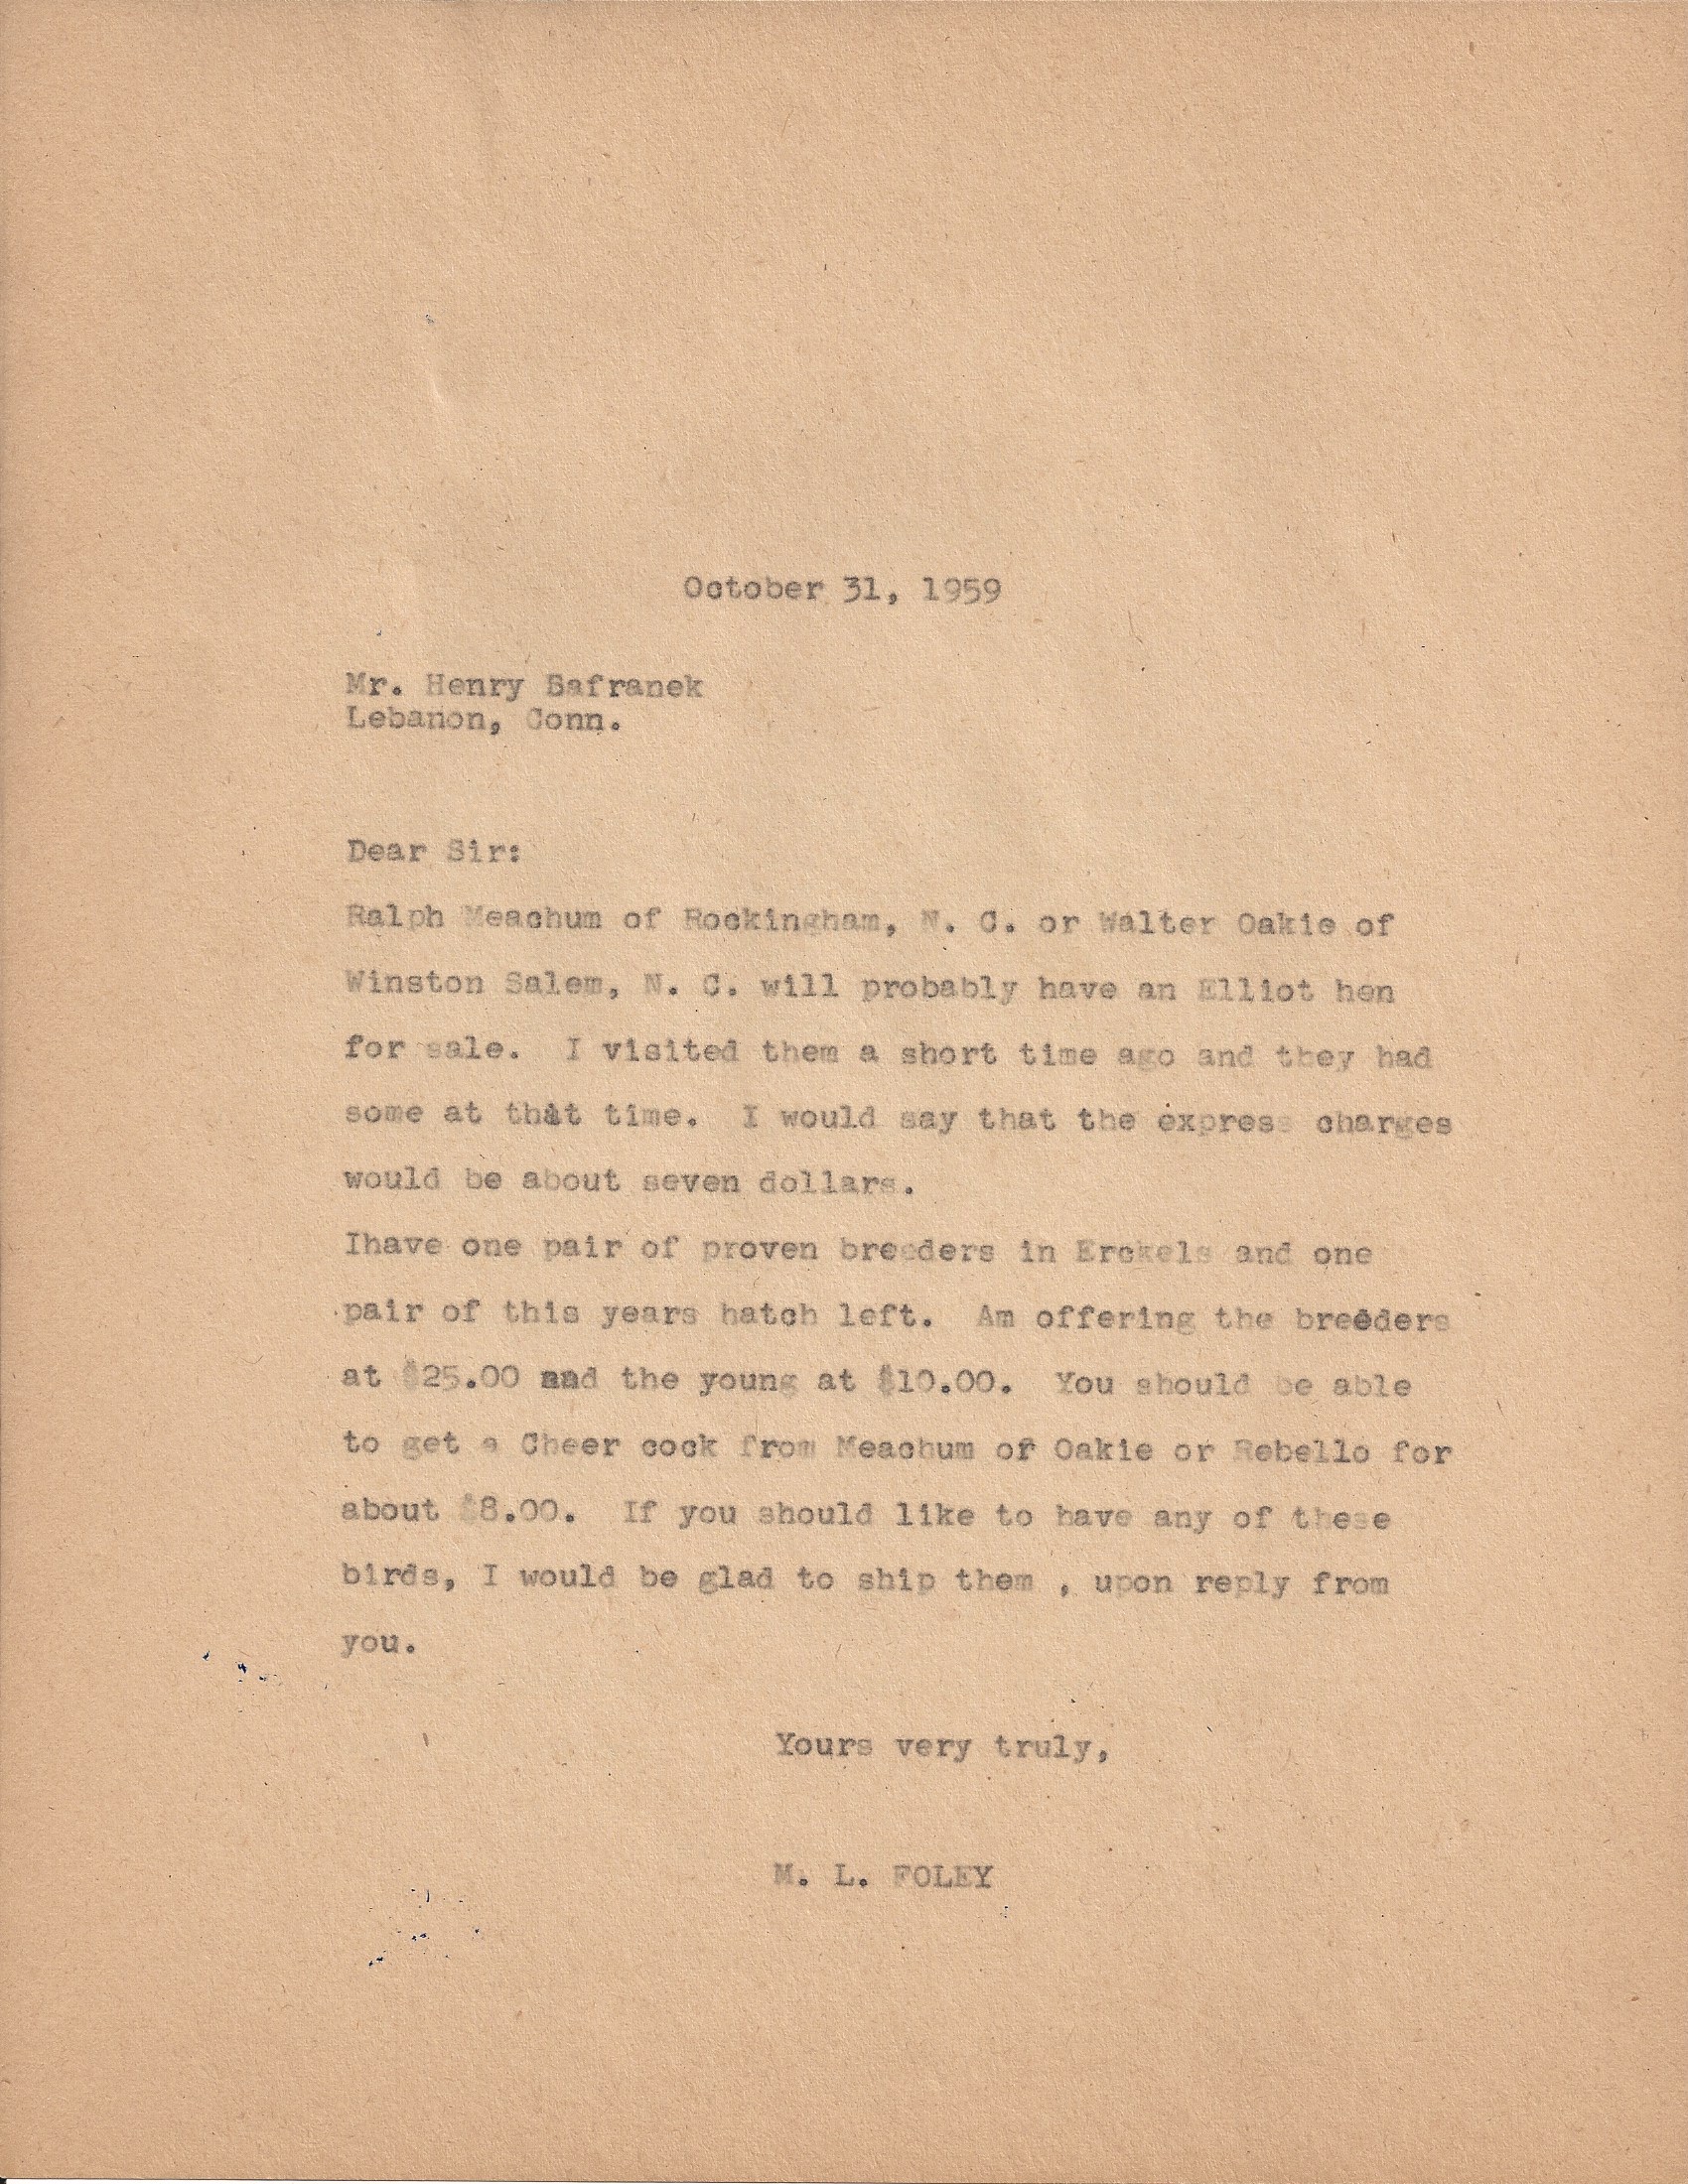 Letter from M.L. Foley to Henry Safranek dated October 31, 1959